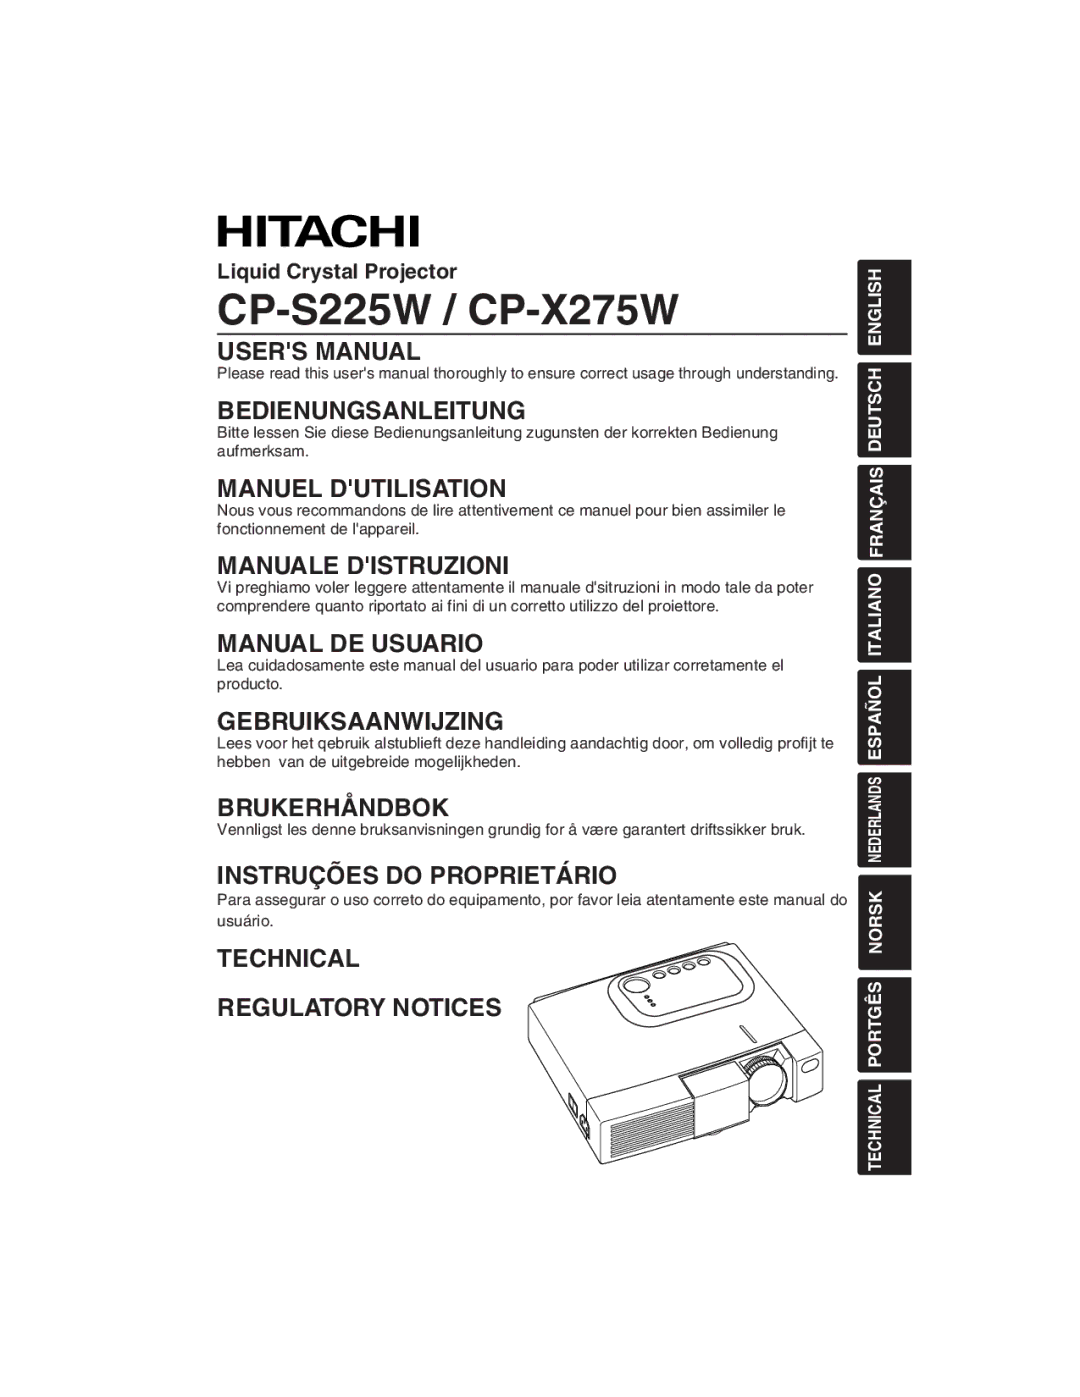 Hitachi user manual CP-S225W / CP-X275W 